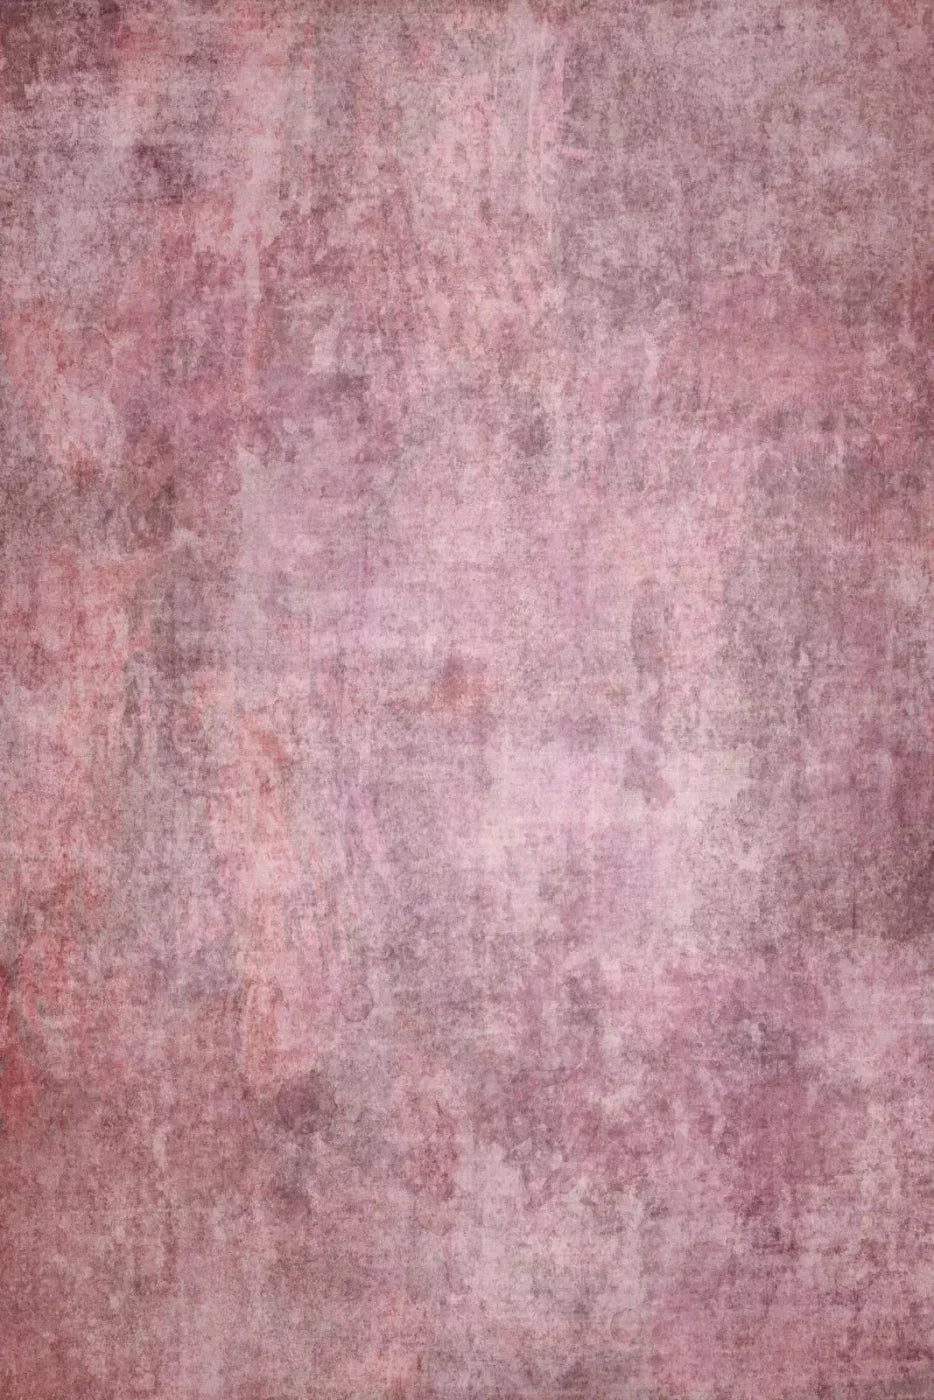 Allie Pink 4X5 Rubbermat Floor ( 48 X 60 Inch ) Backdrop